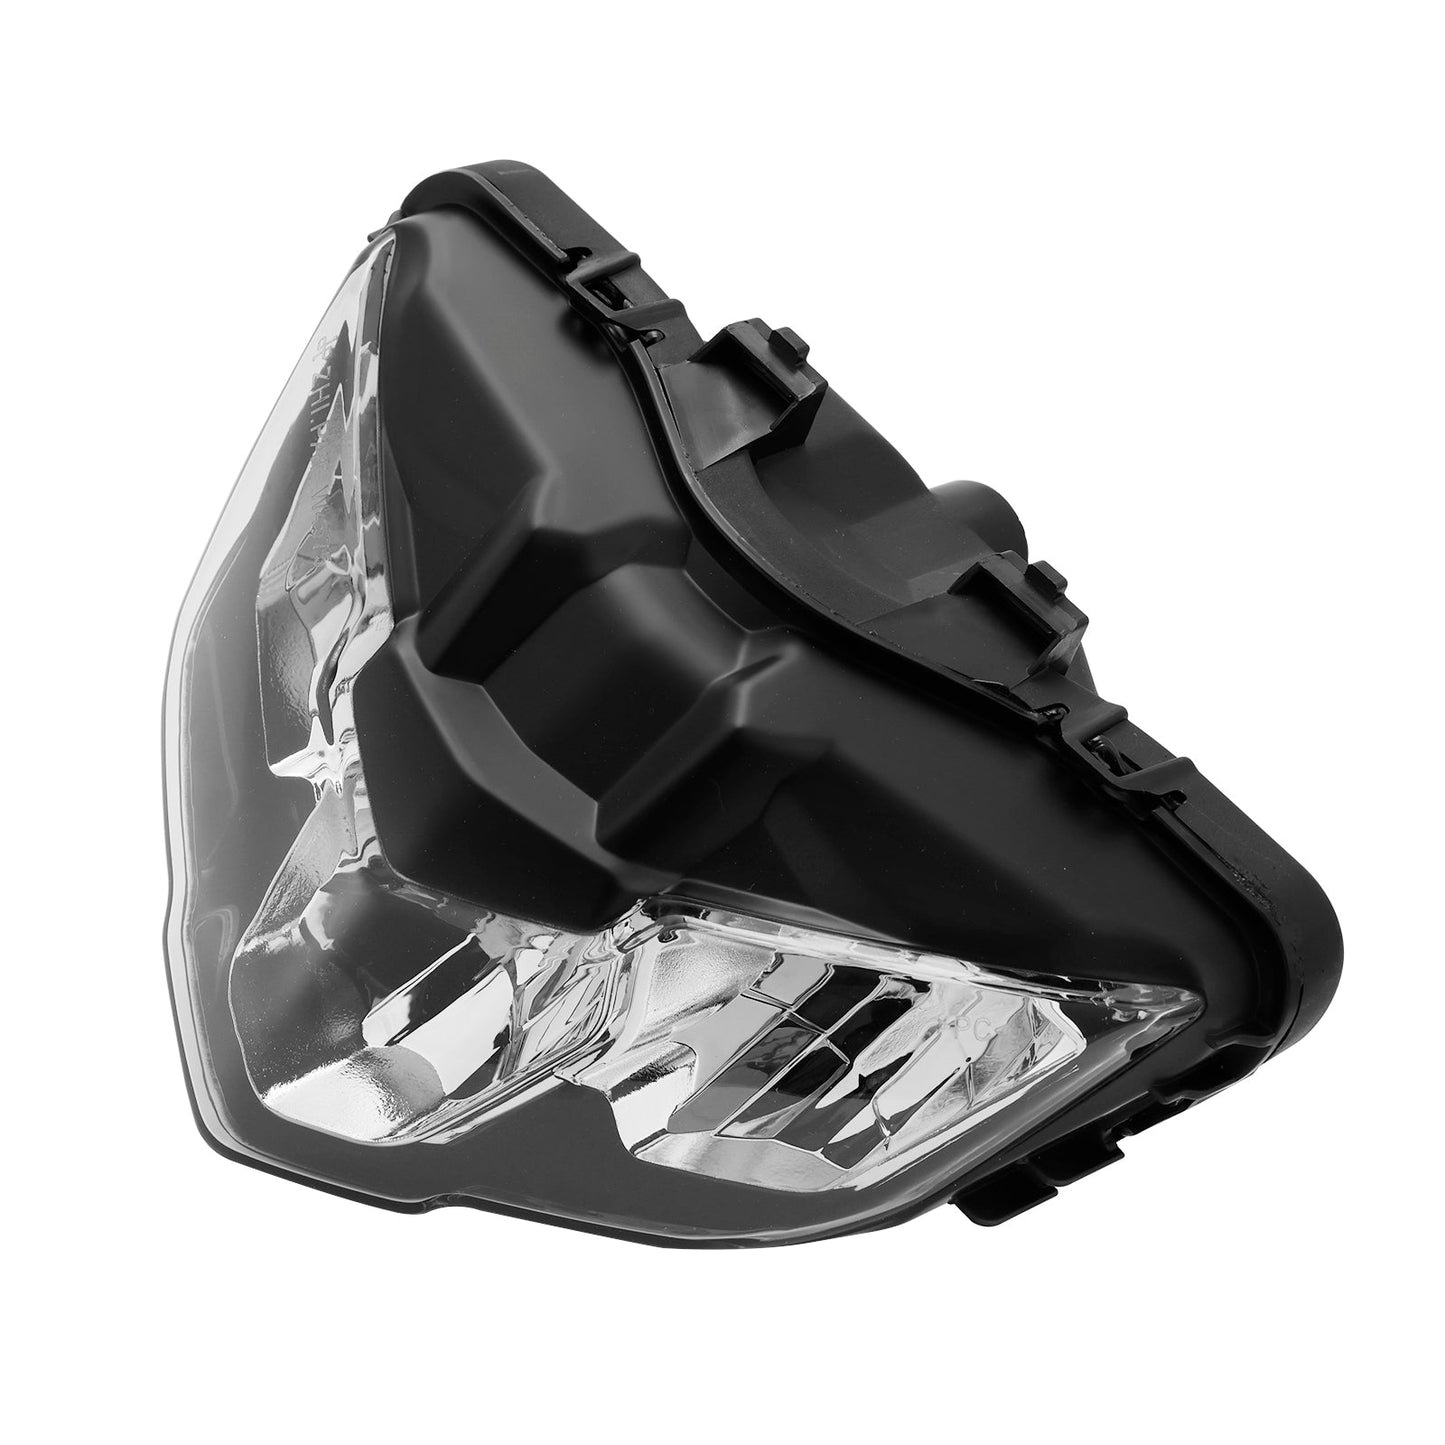 Yamaha Y15ZR V2 2019-2021 Front Headlight Grille Headlamp Led Protector